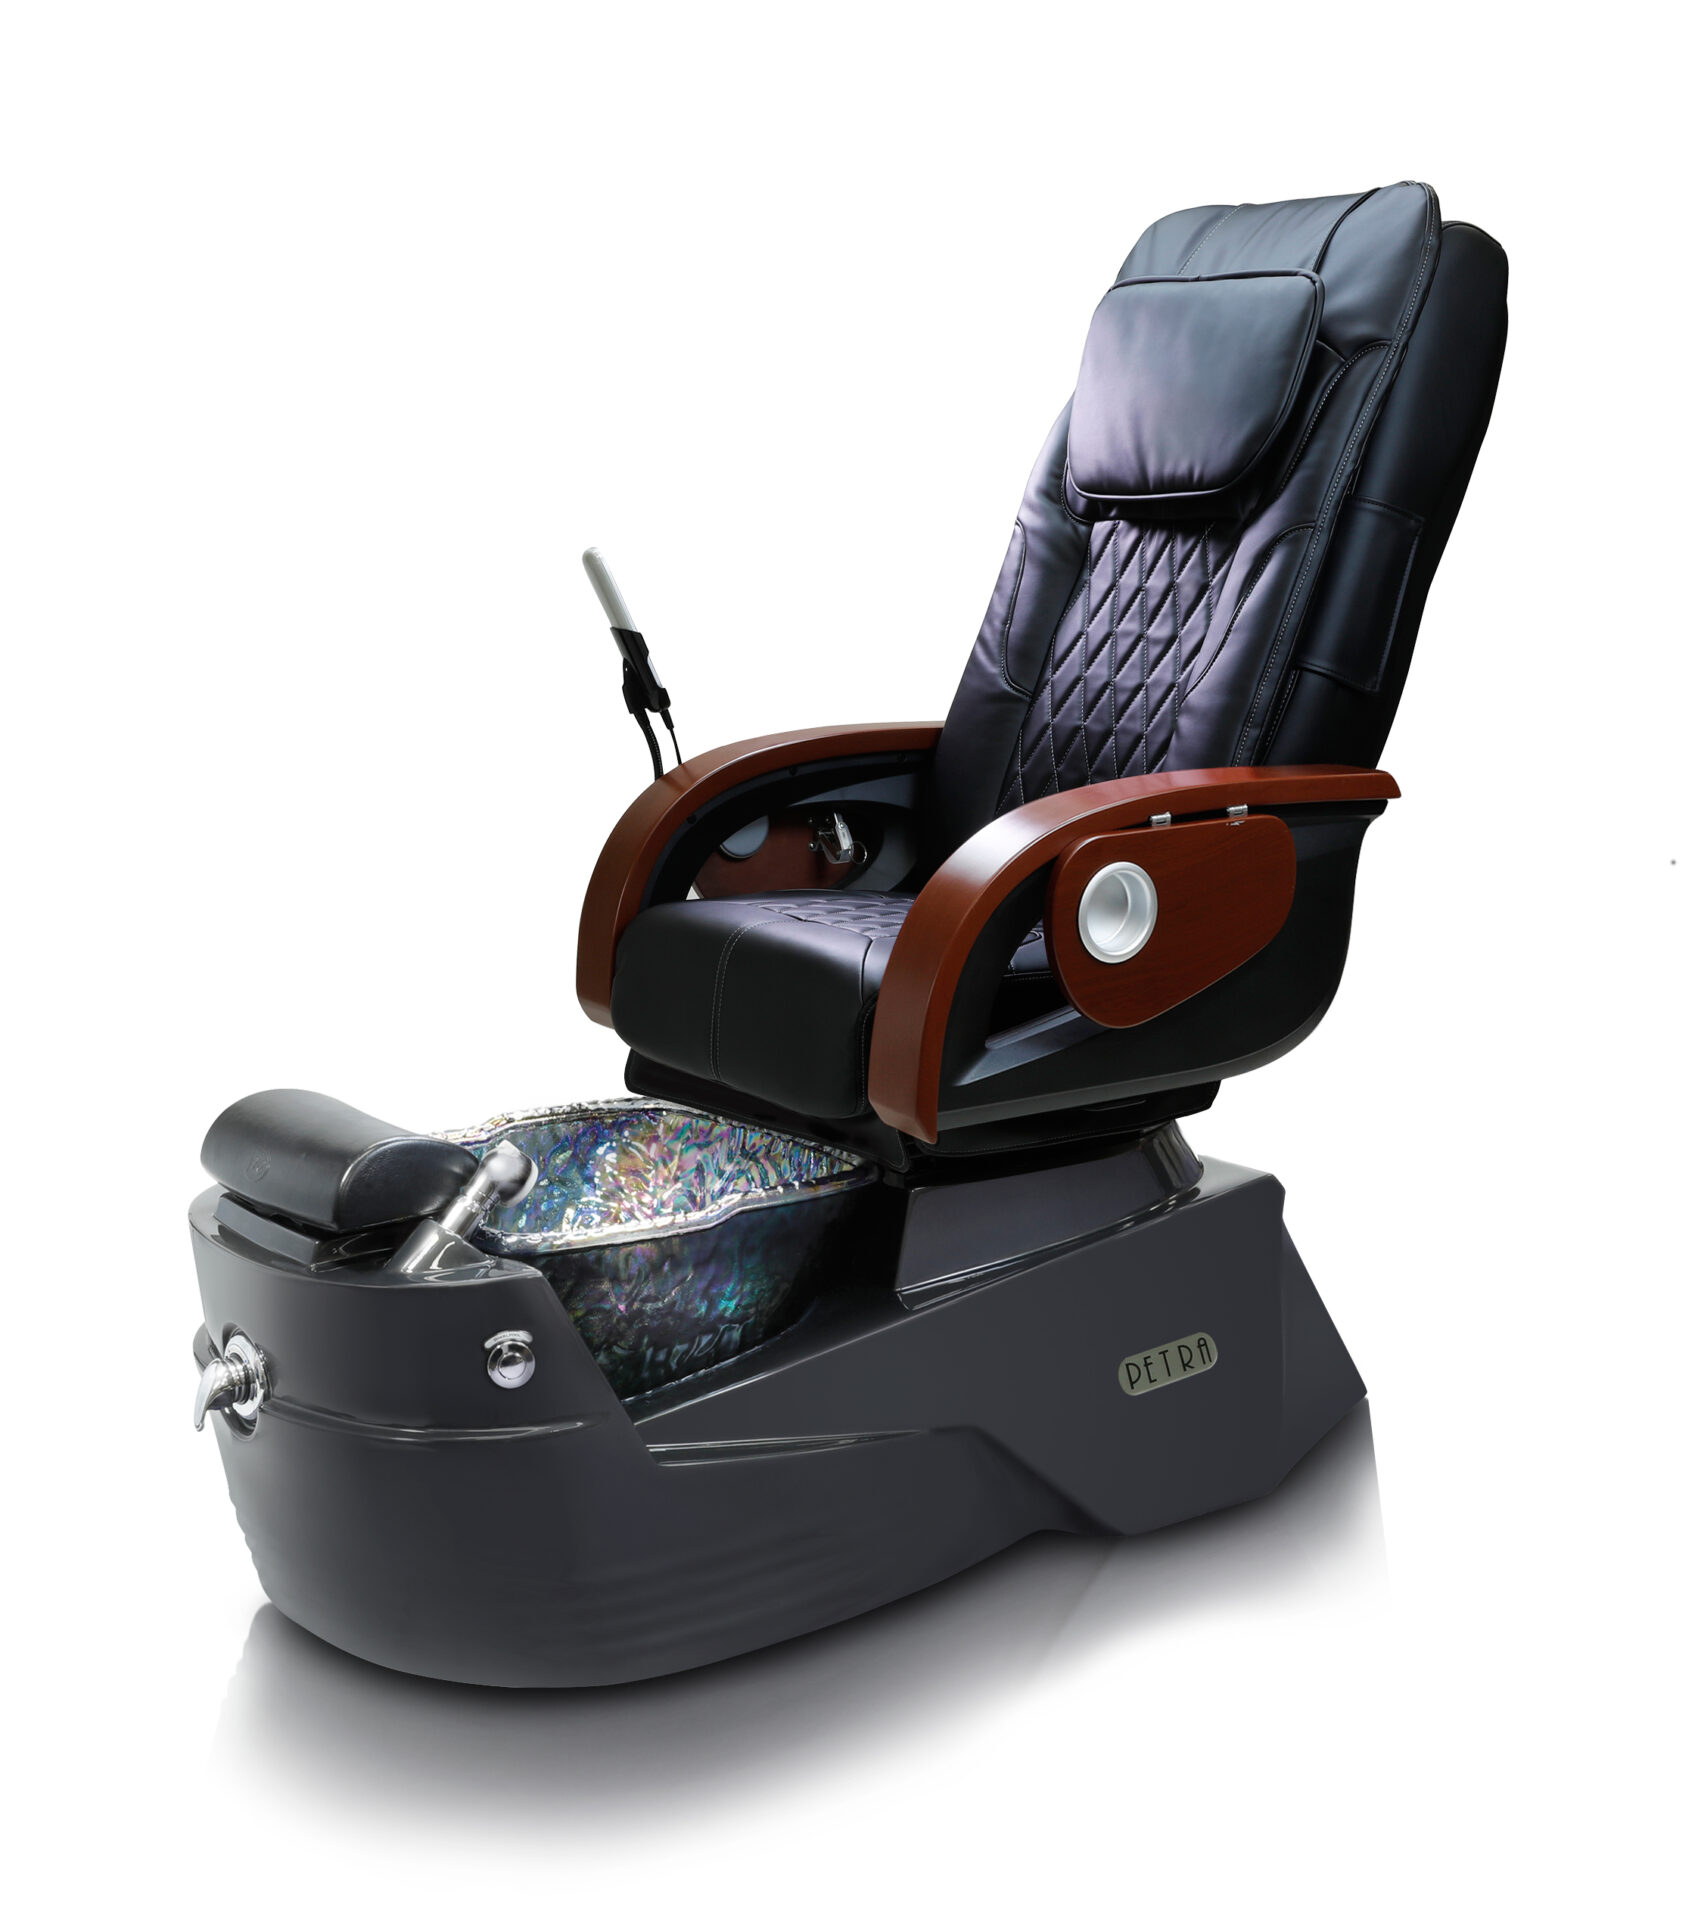 Petra-GX-Pedicure-Spa-Grey-Base-Black-Bowl-Black-Chair & A Pedicure Spa Chair & Furniture